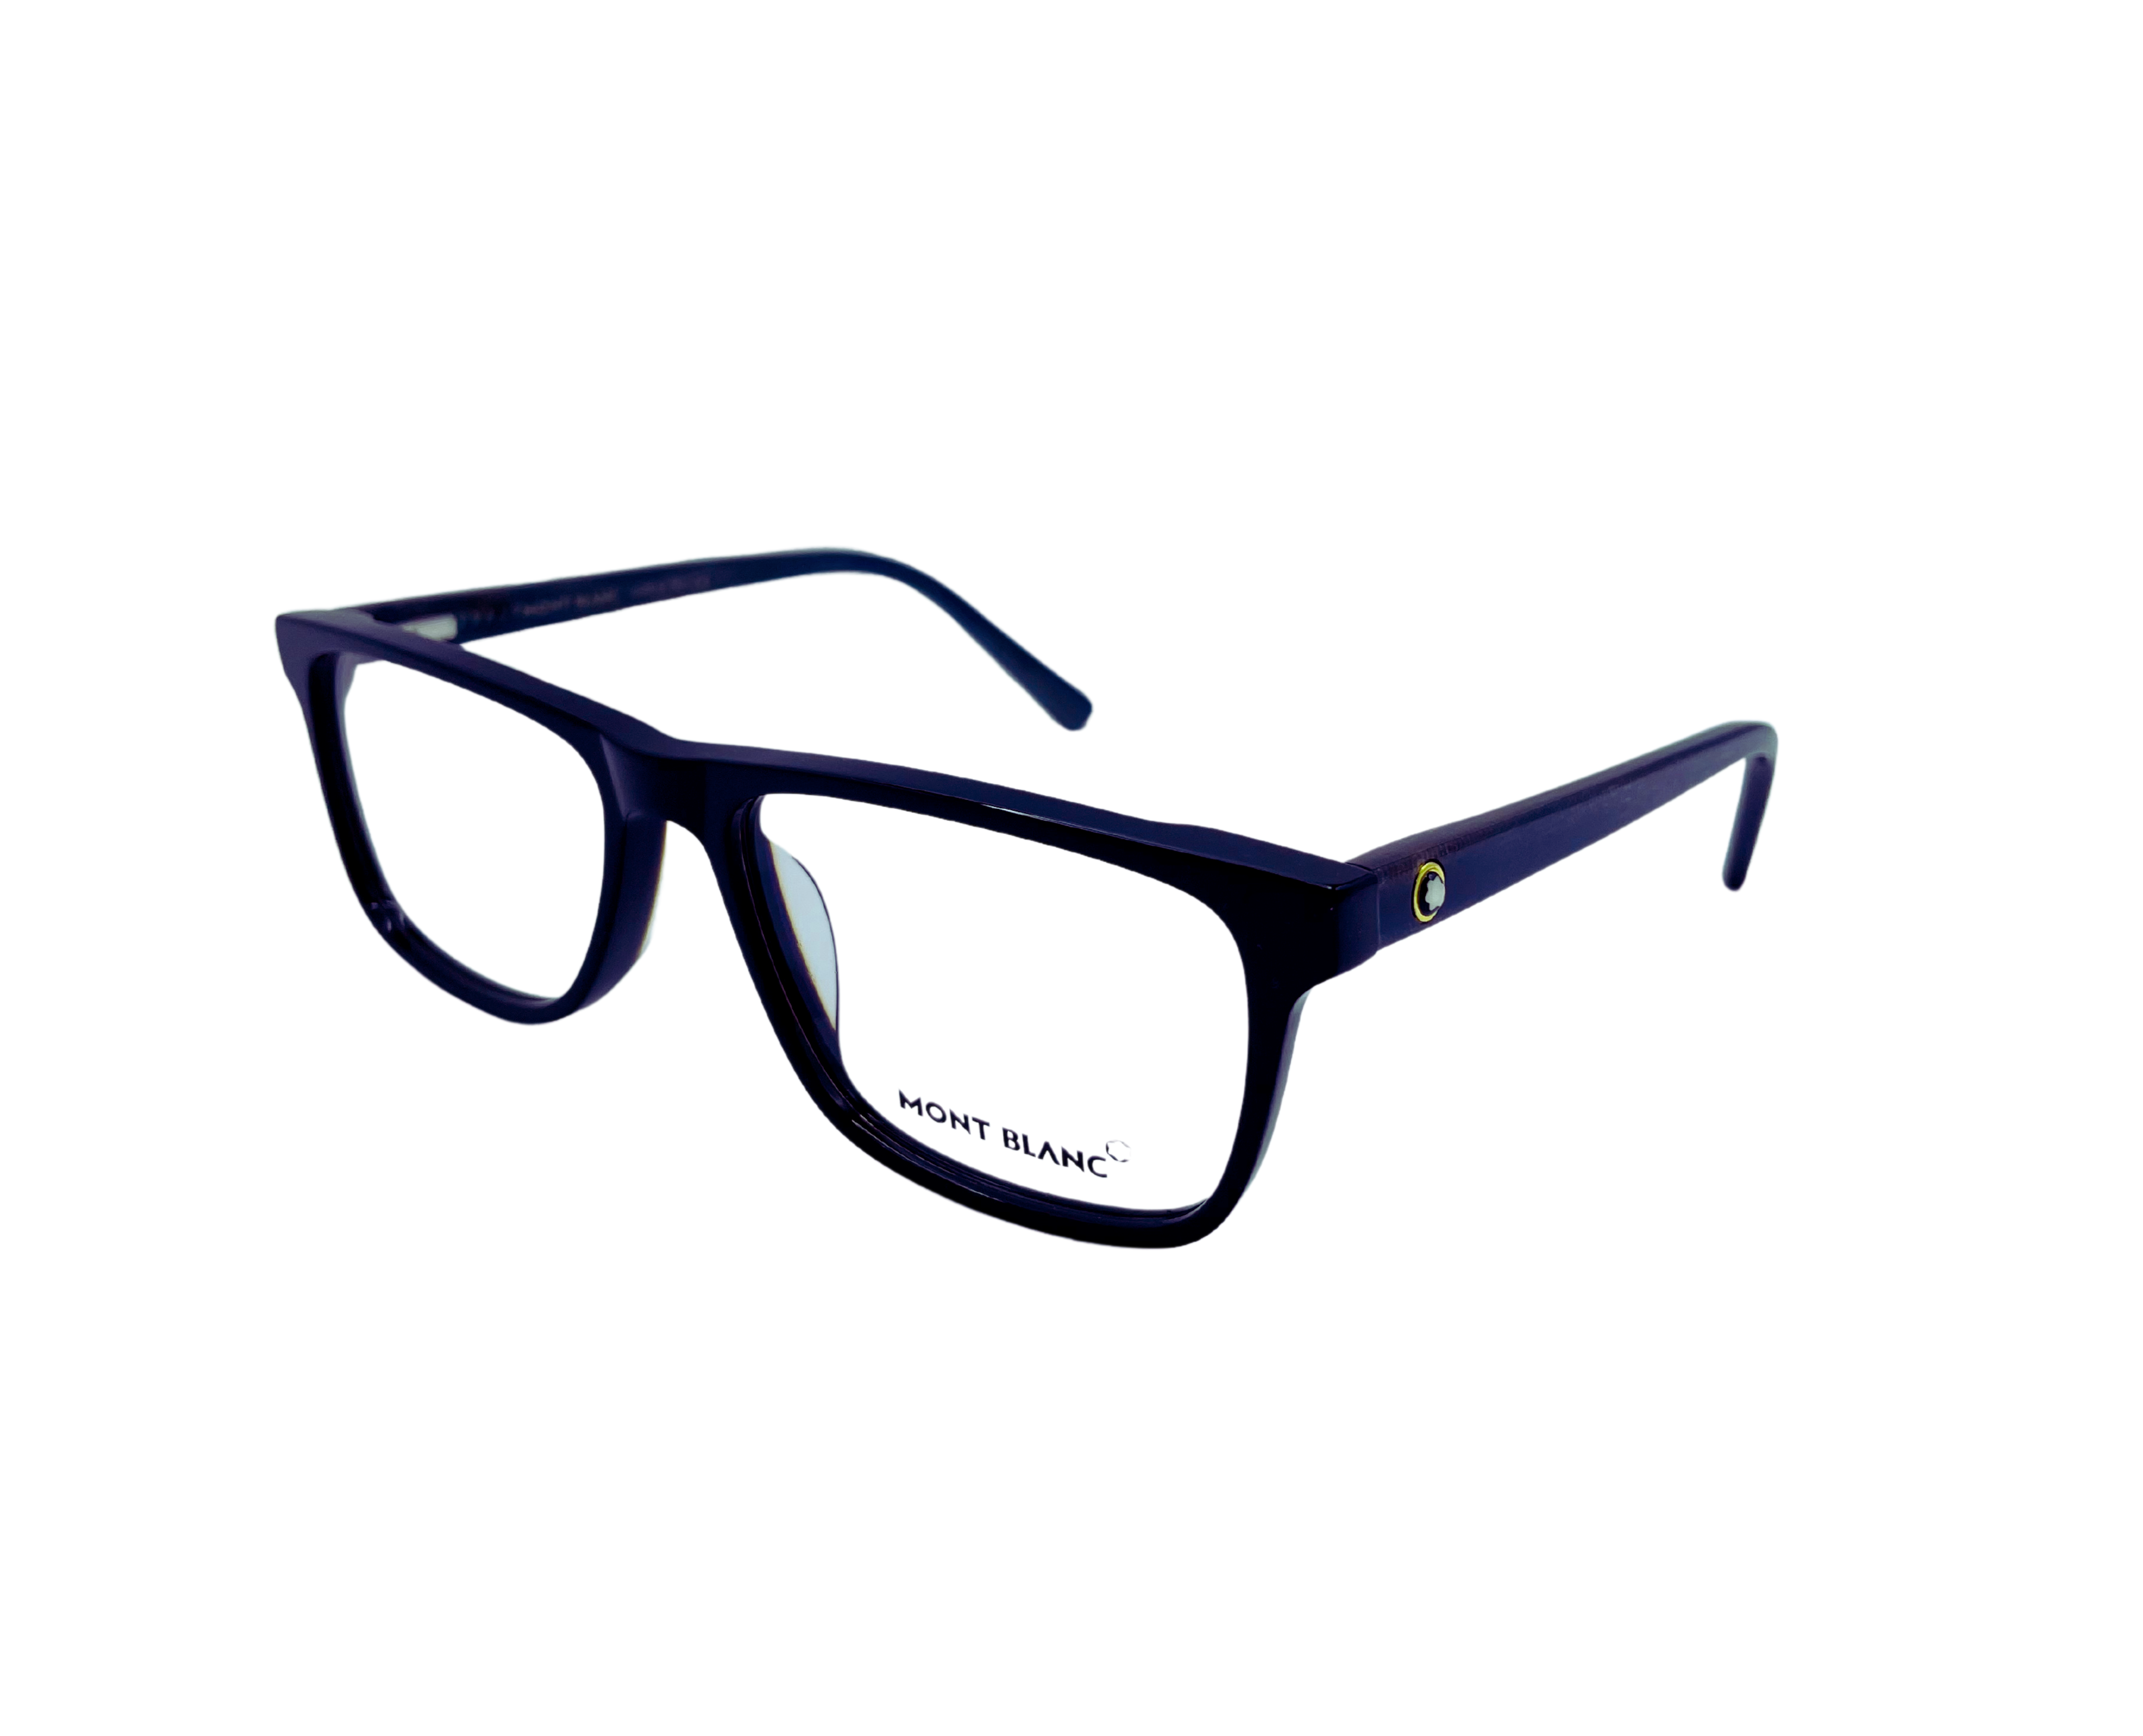 NS Luxury - 150 - Blue - Eyeglasses